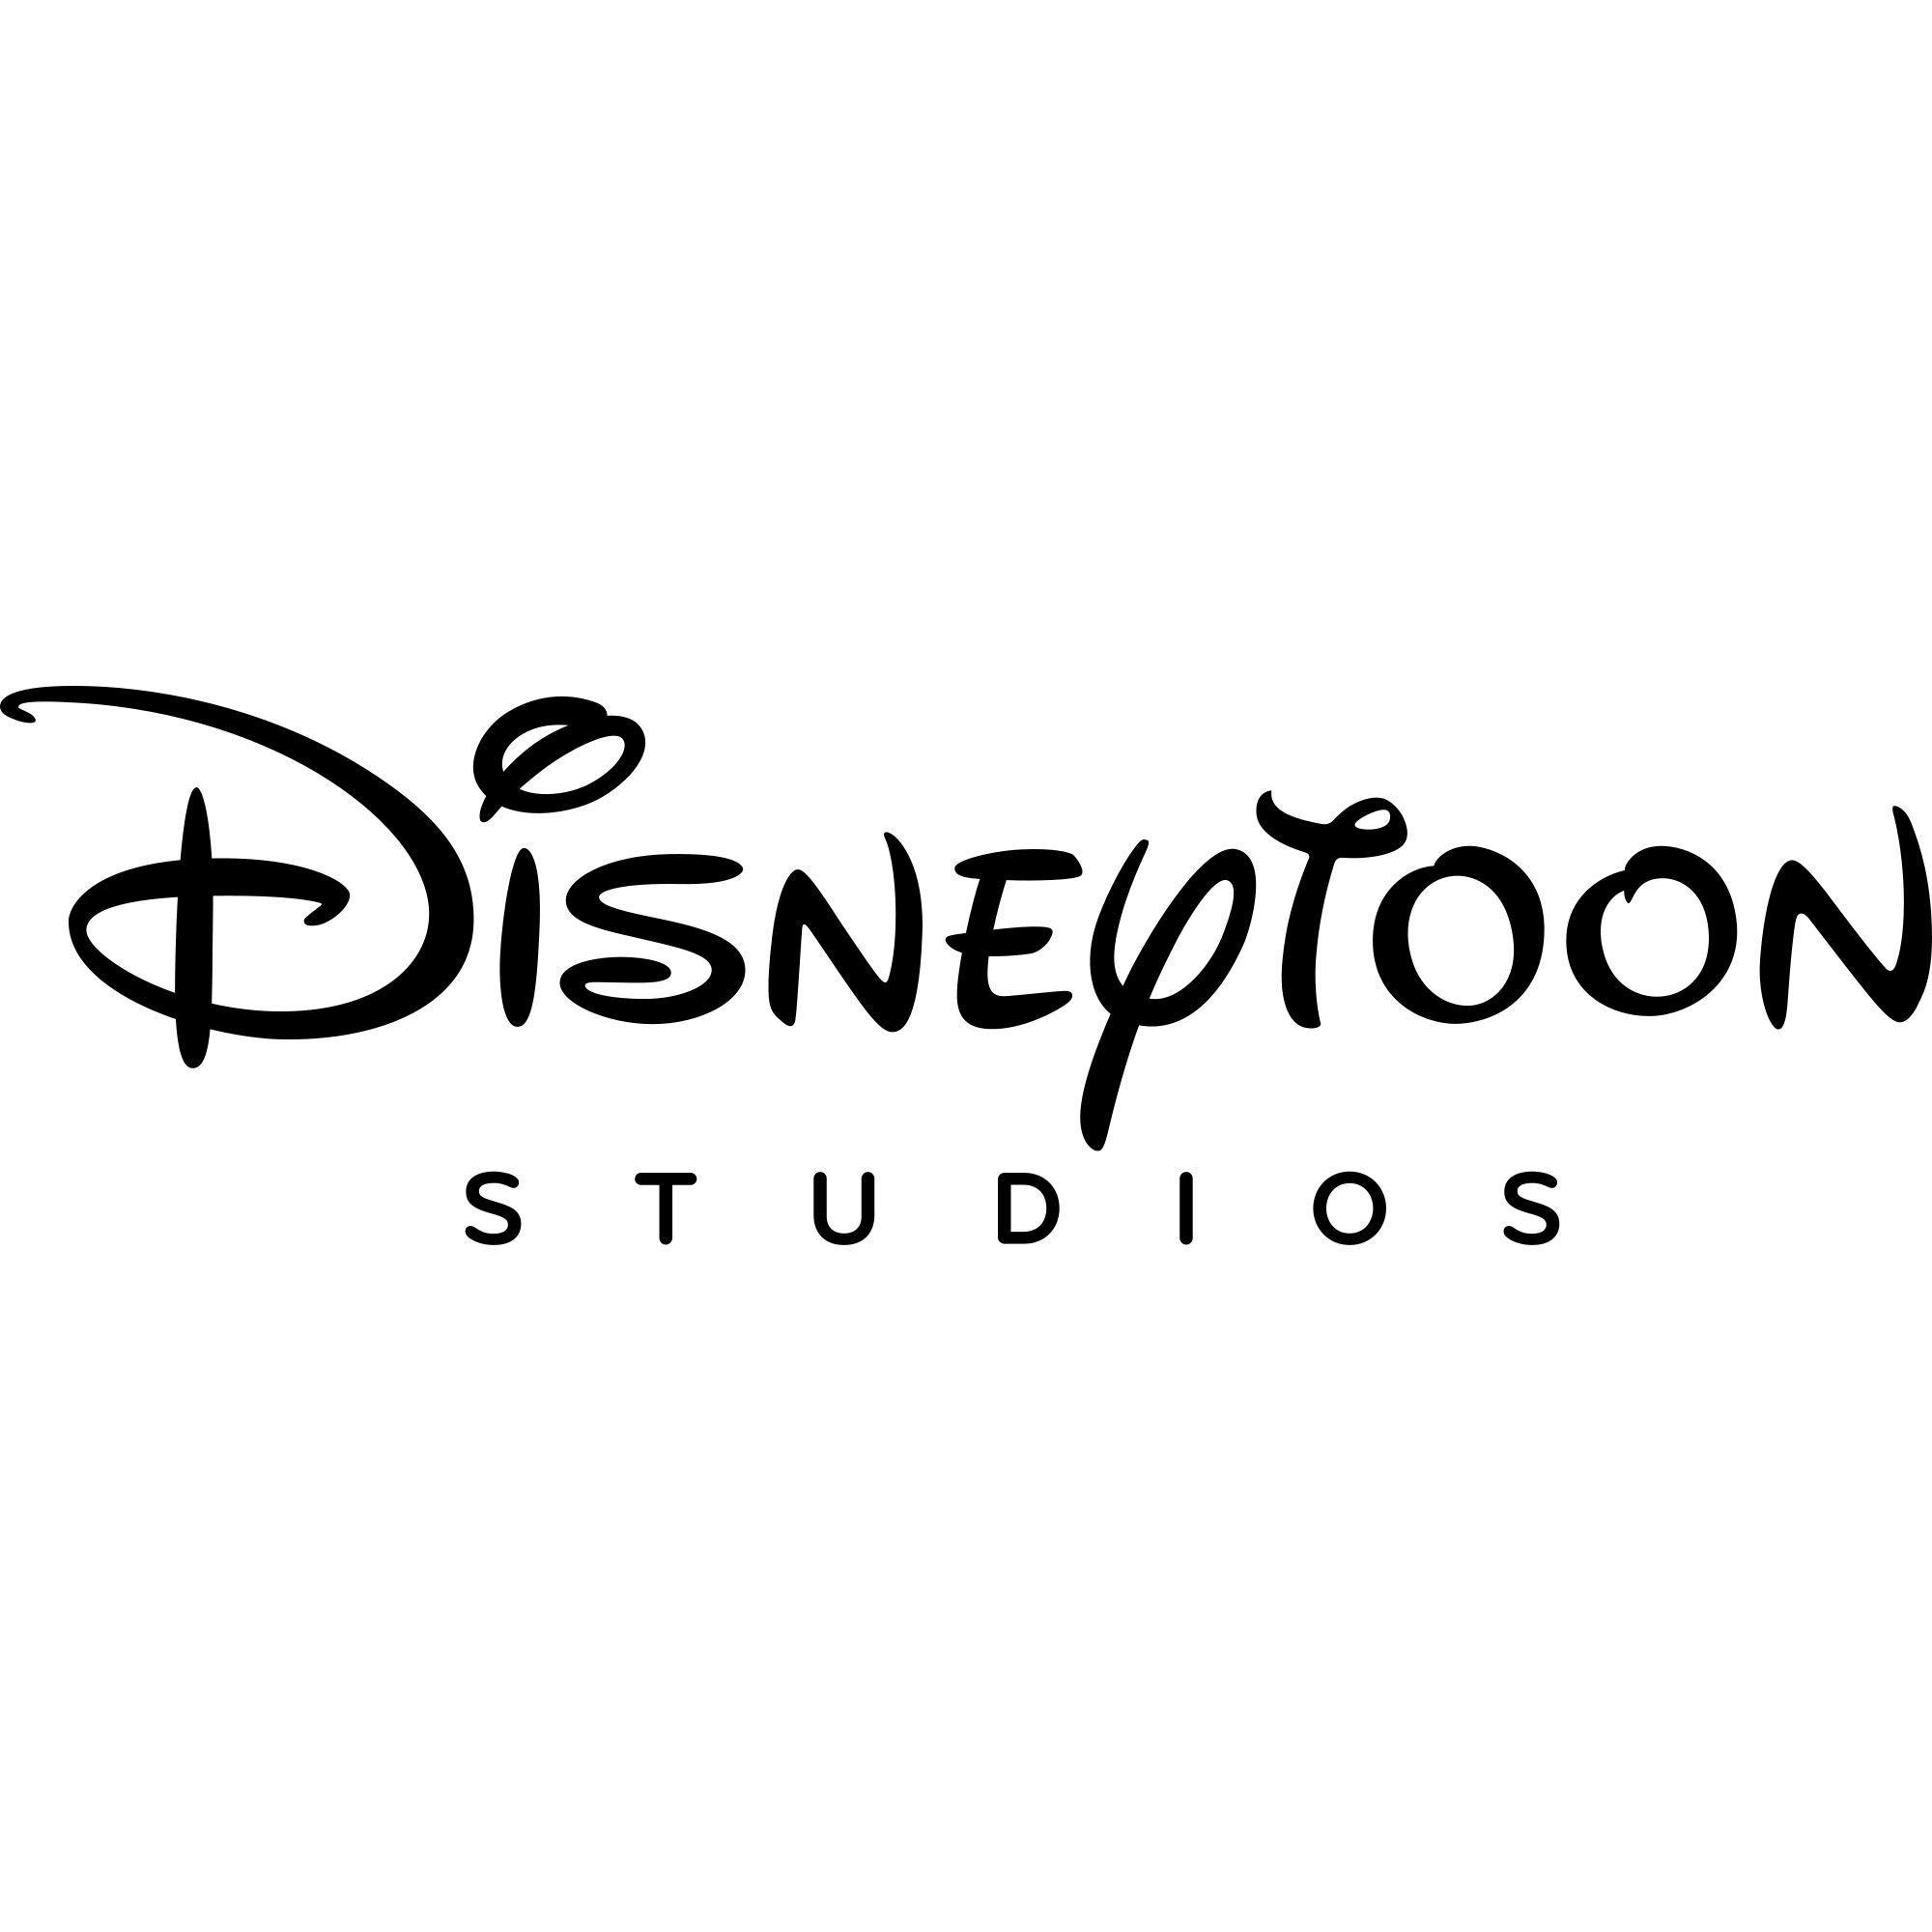 DisneyToon Studios Logo - disneytoon #studios #logos #cartoons #toons #disney #animation